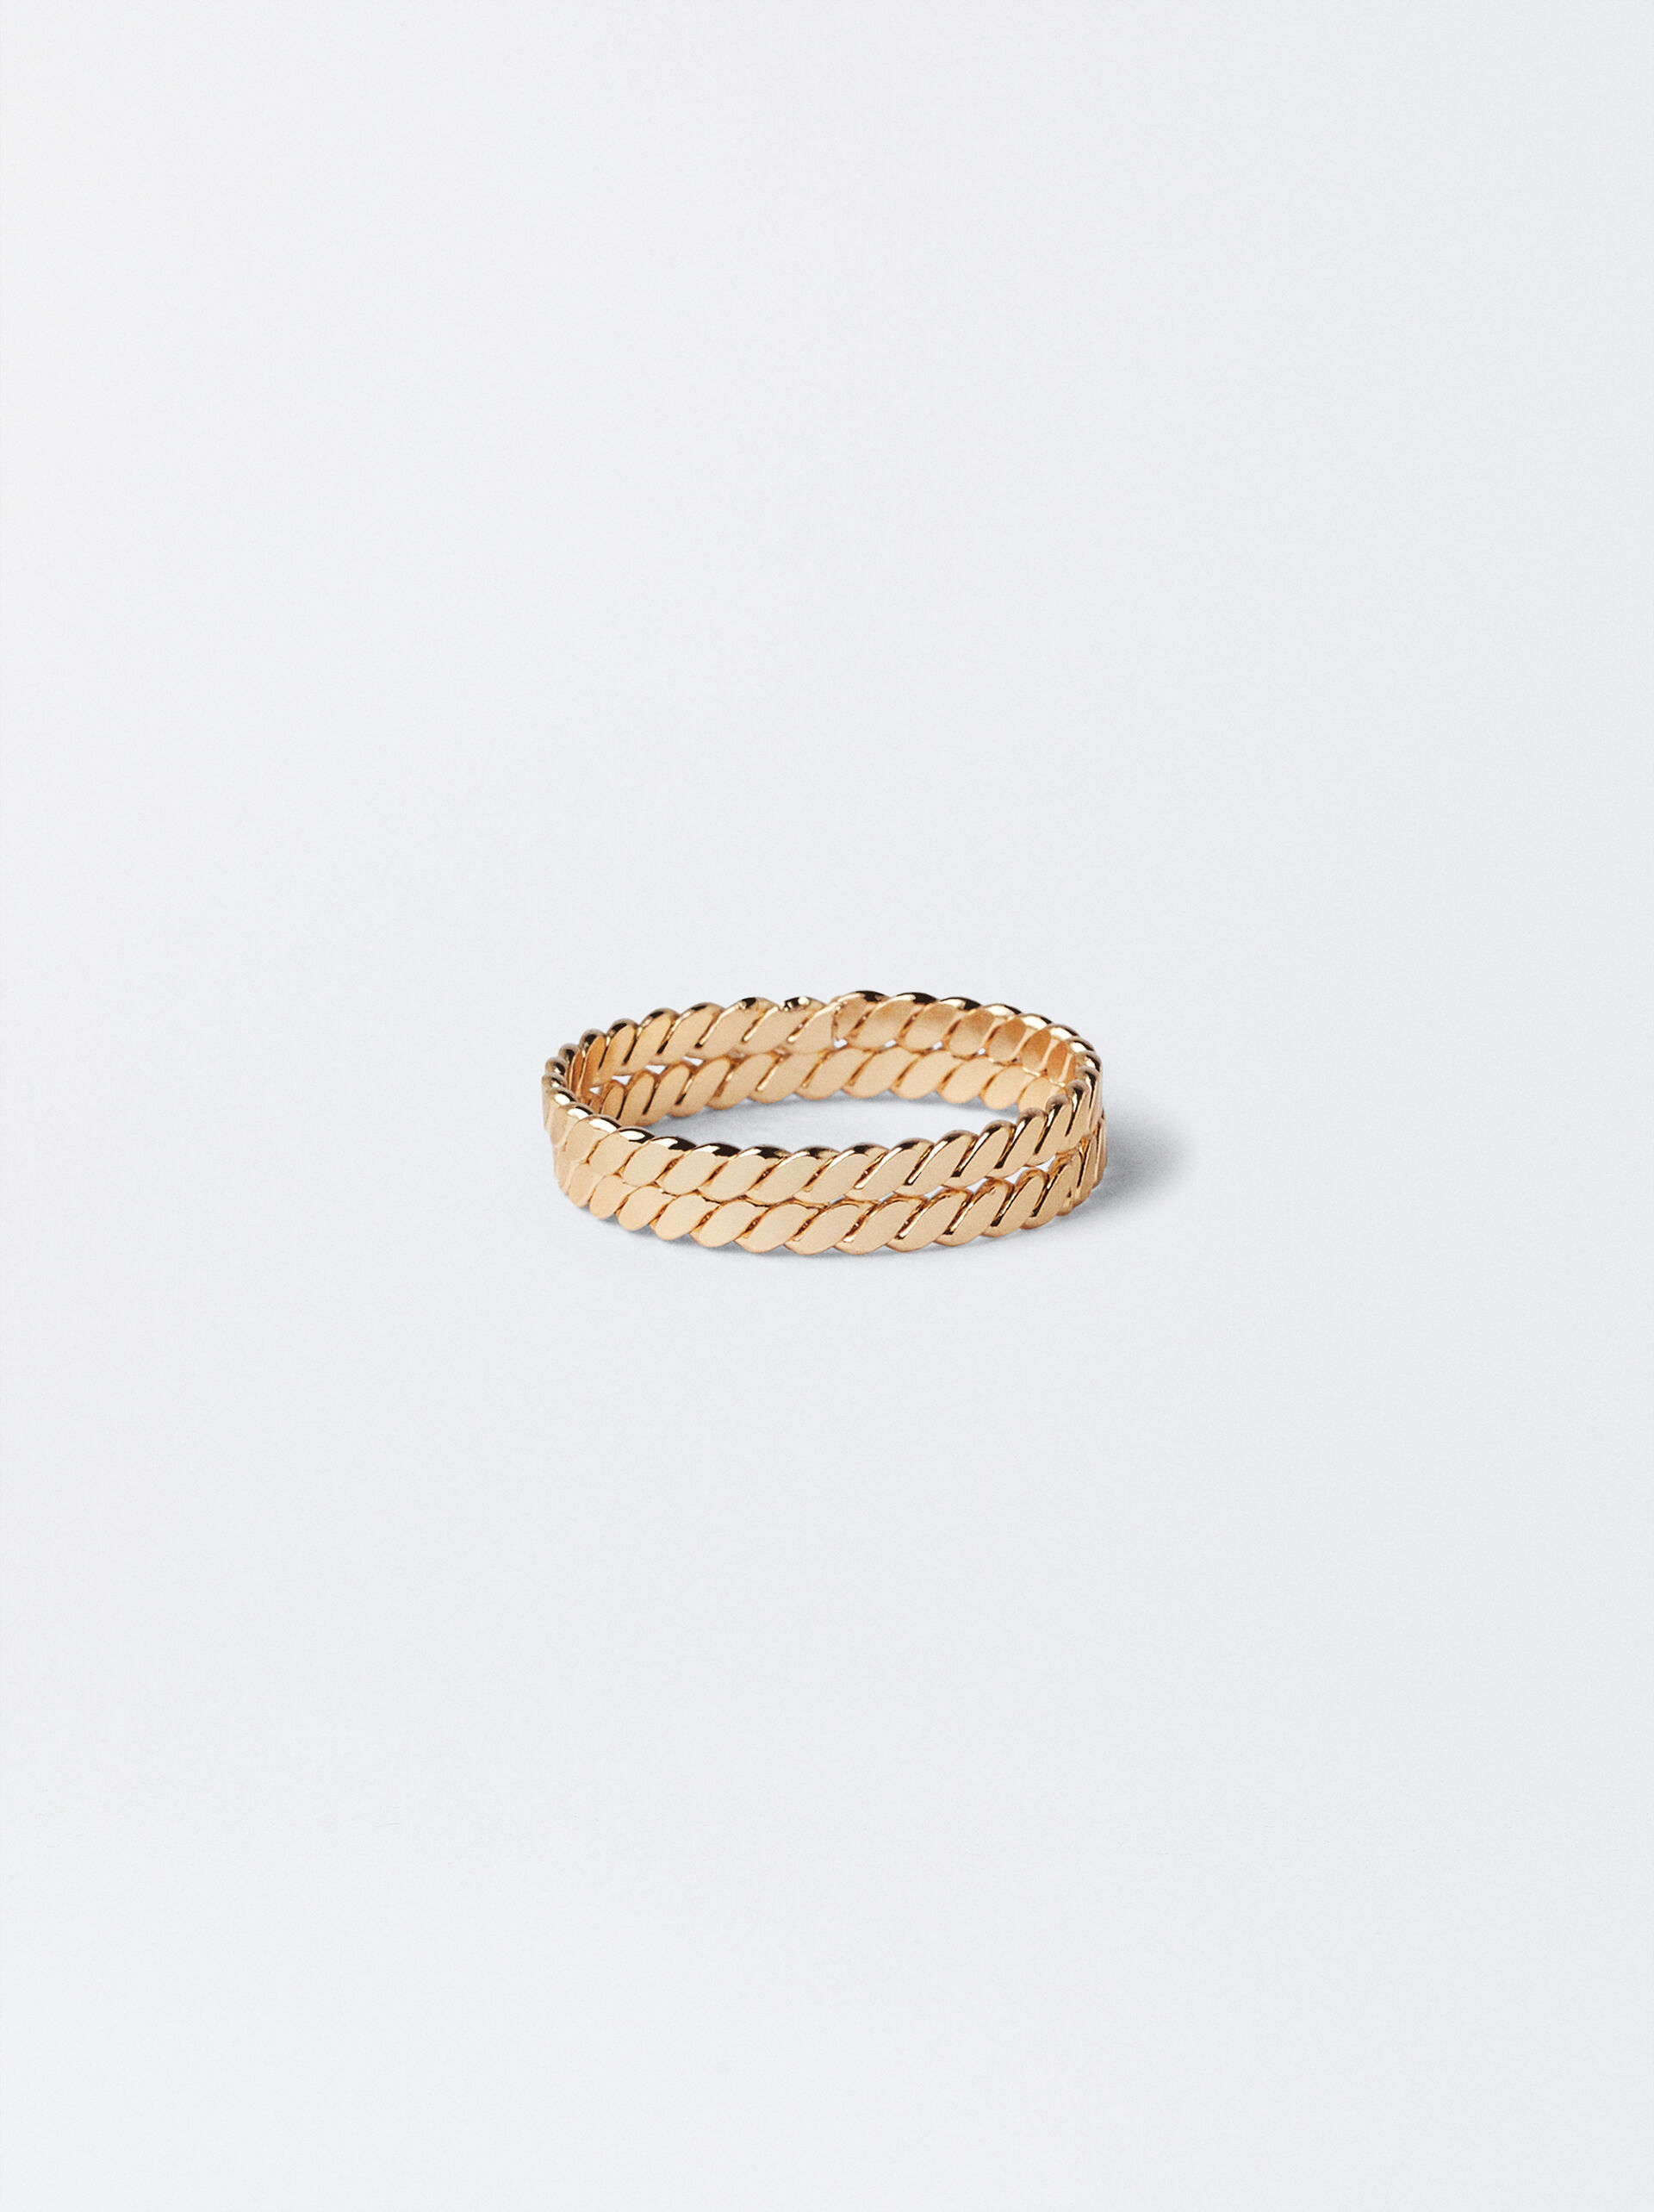 Golden Band Ring image number 0.0